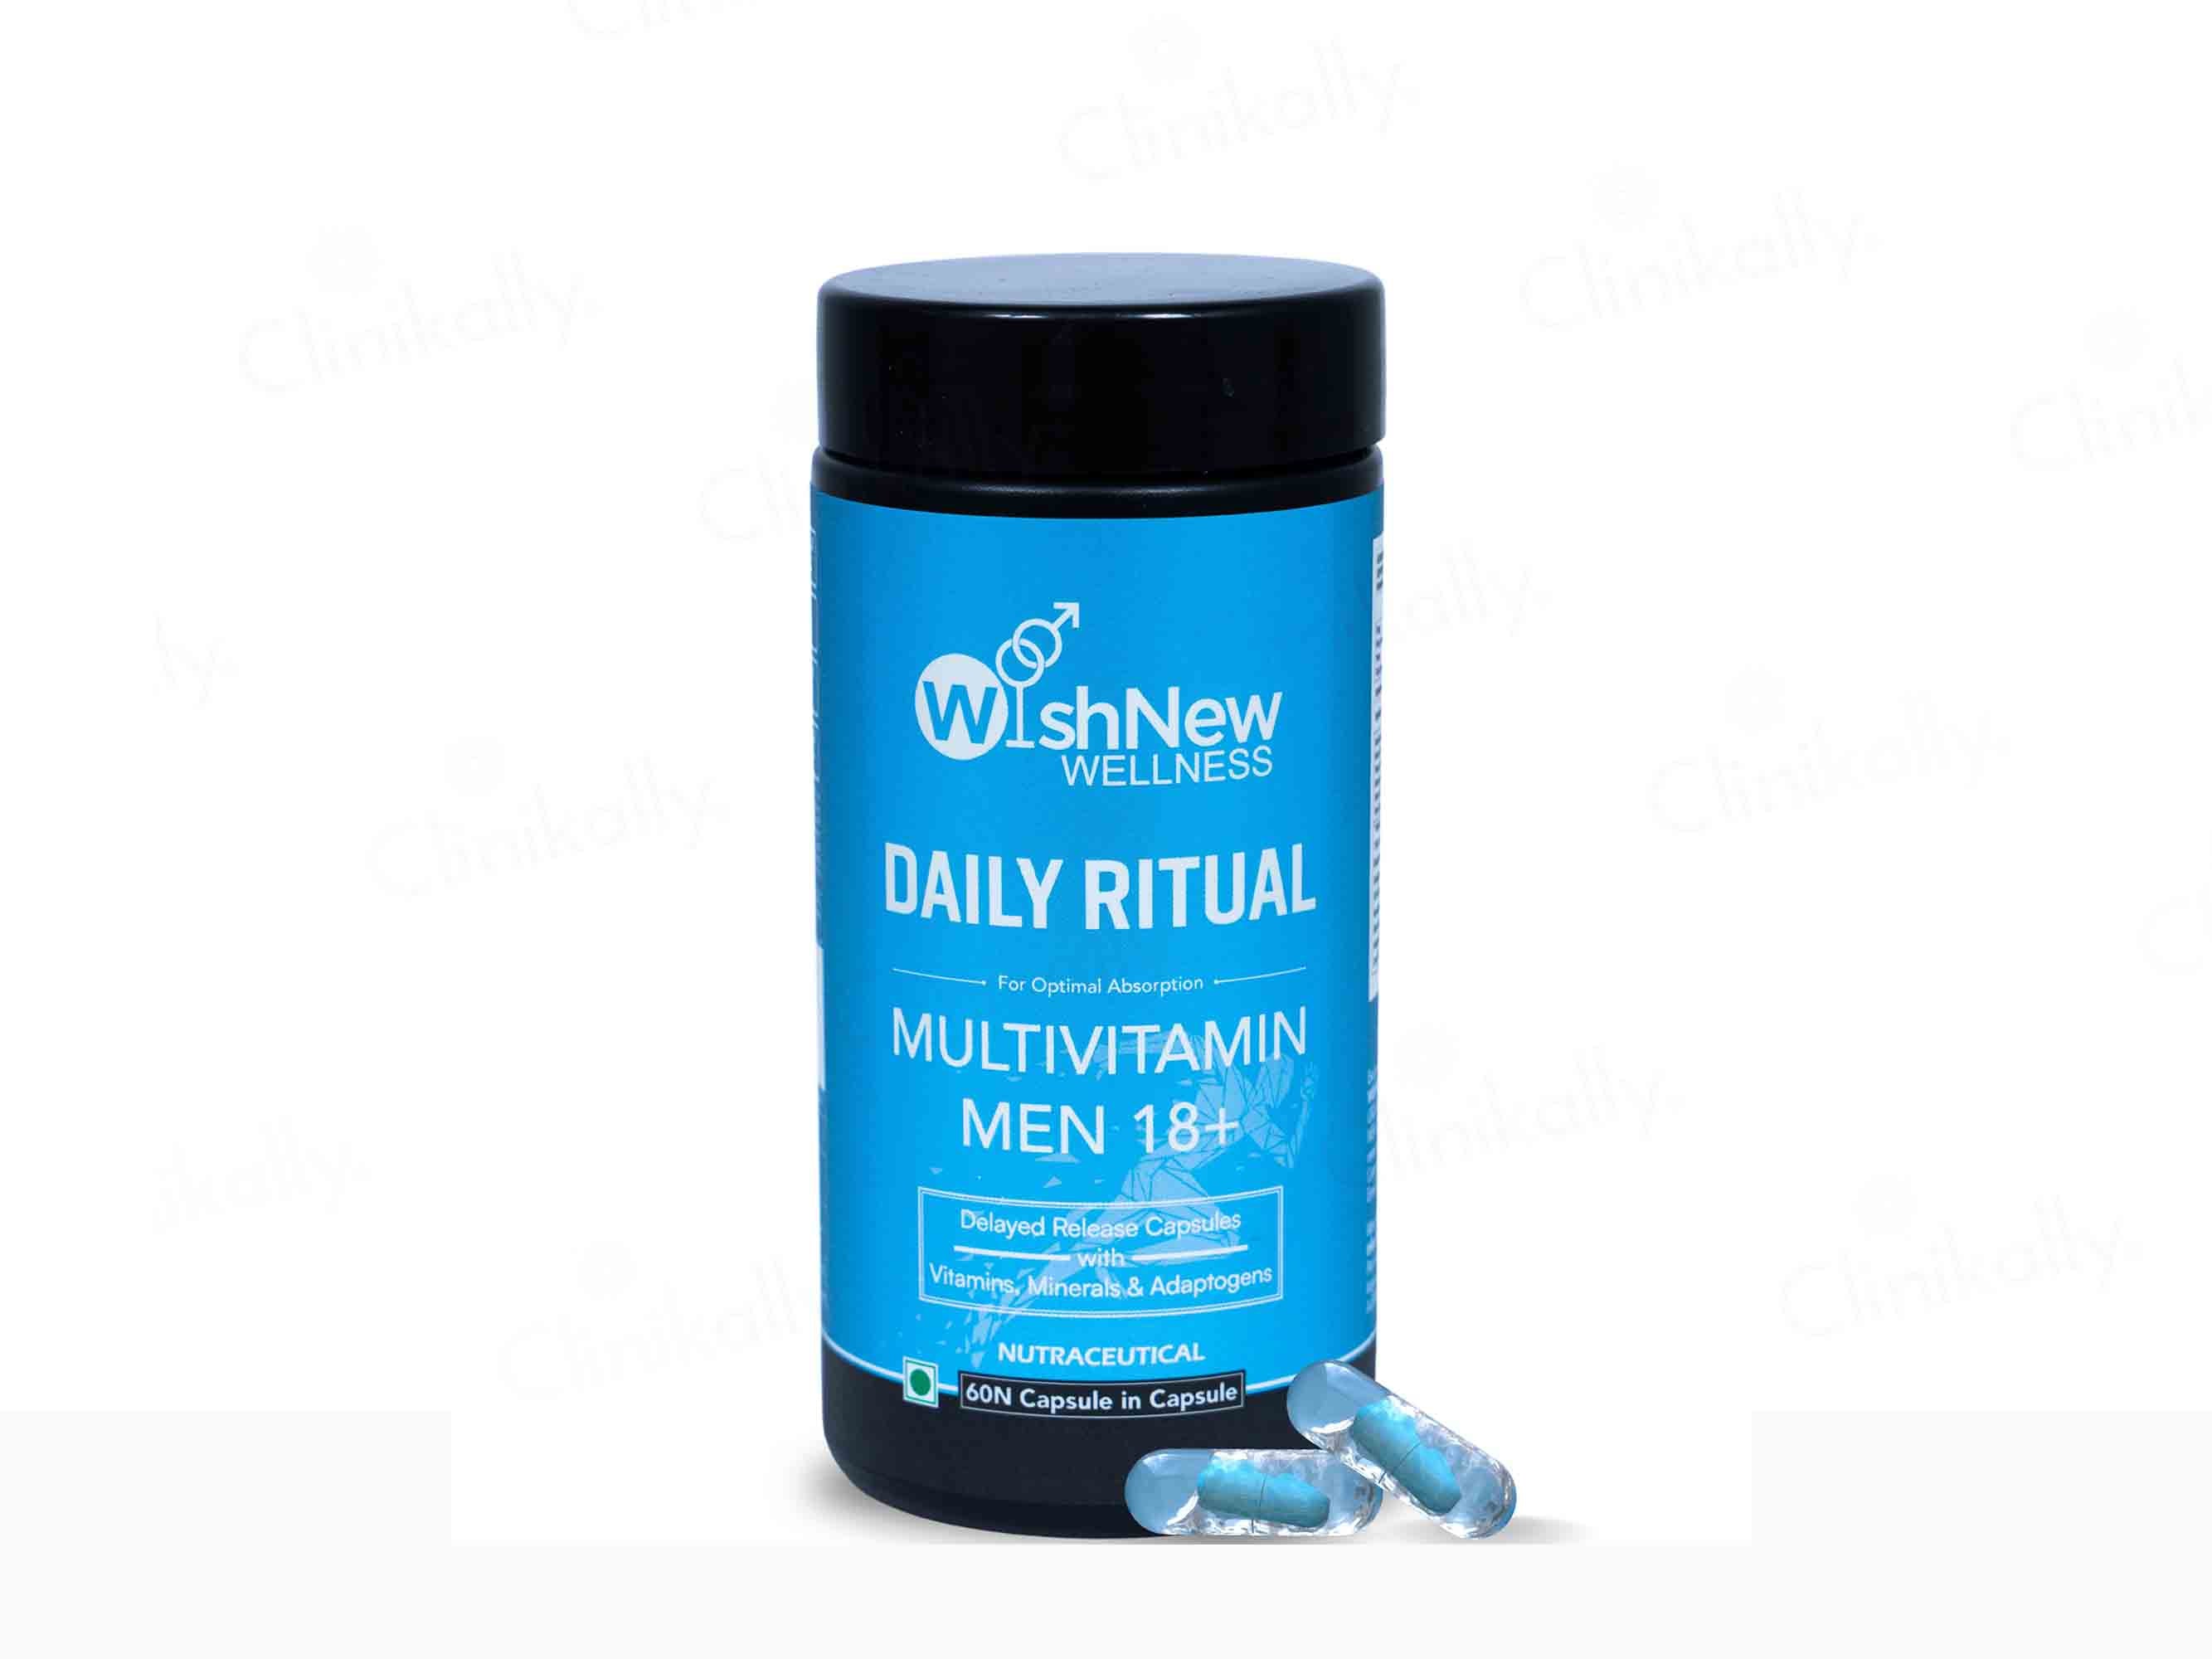 WishNew Wellness Daily Ritual Multivitamin Capsule For Men 18+